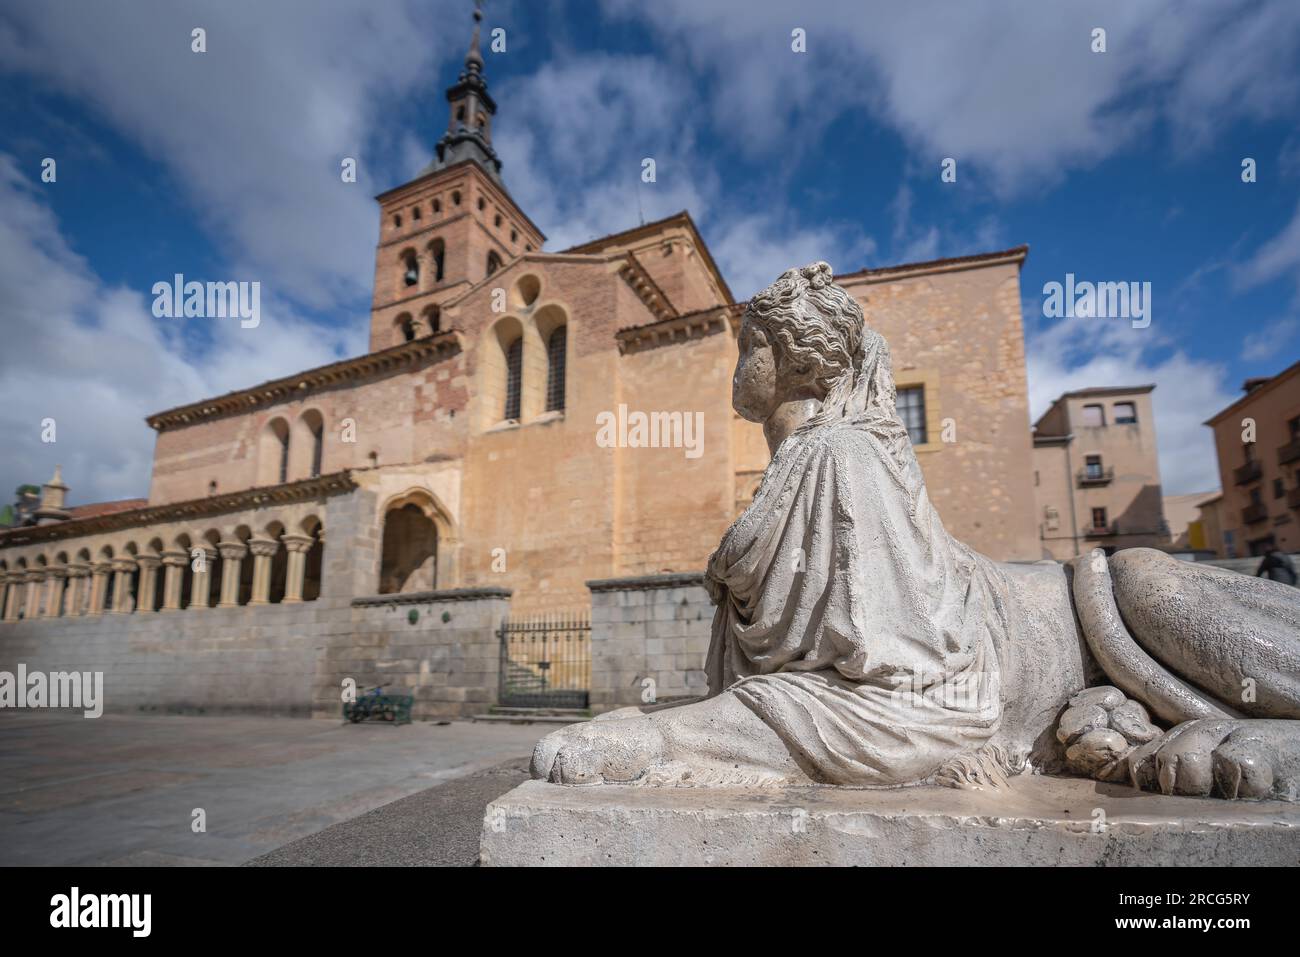 Sirenas de Segovia Sculpture (Segovia Mermaid) and Church of San Martin - Segovia, Spain Stock Photo